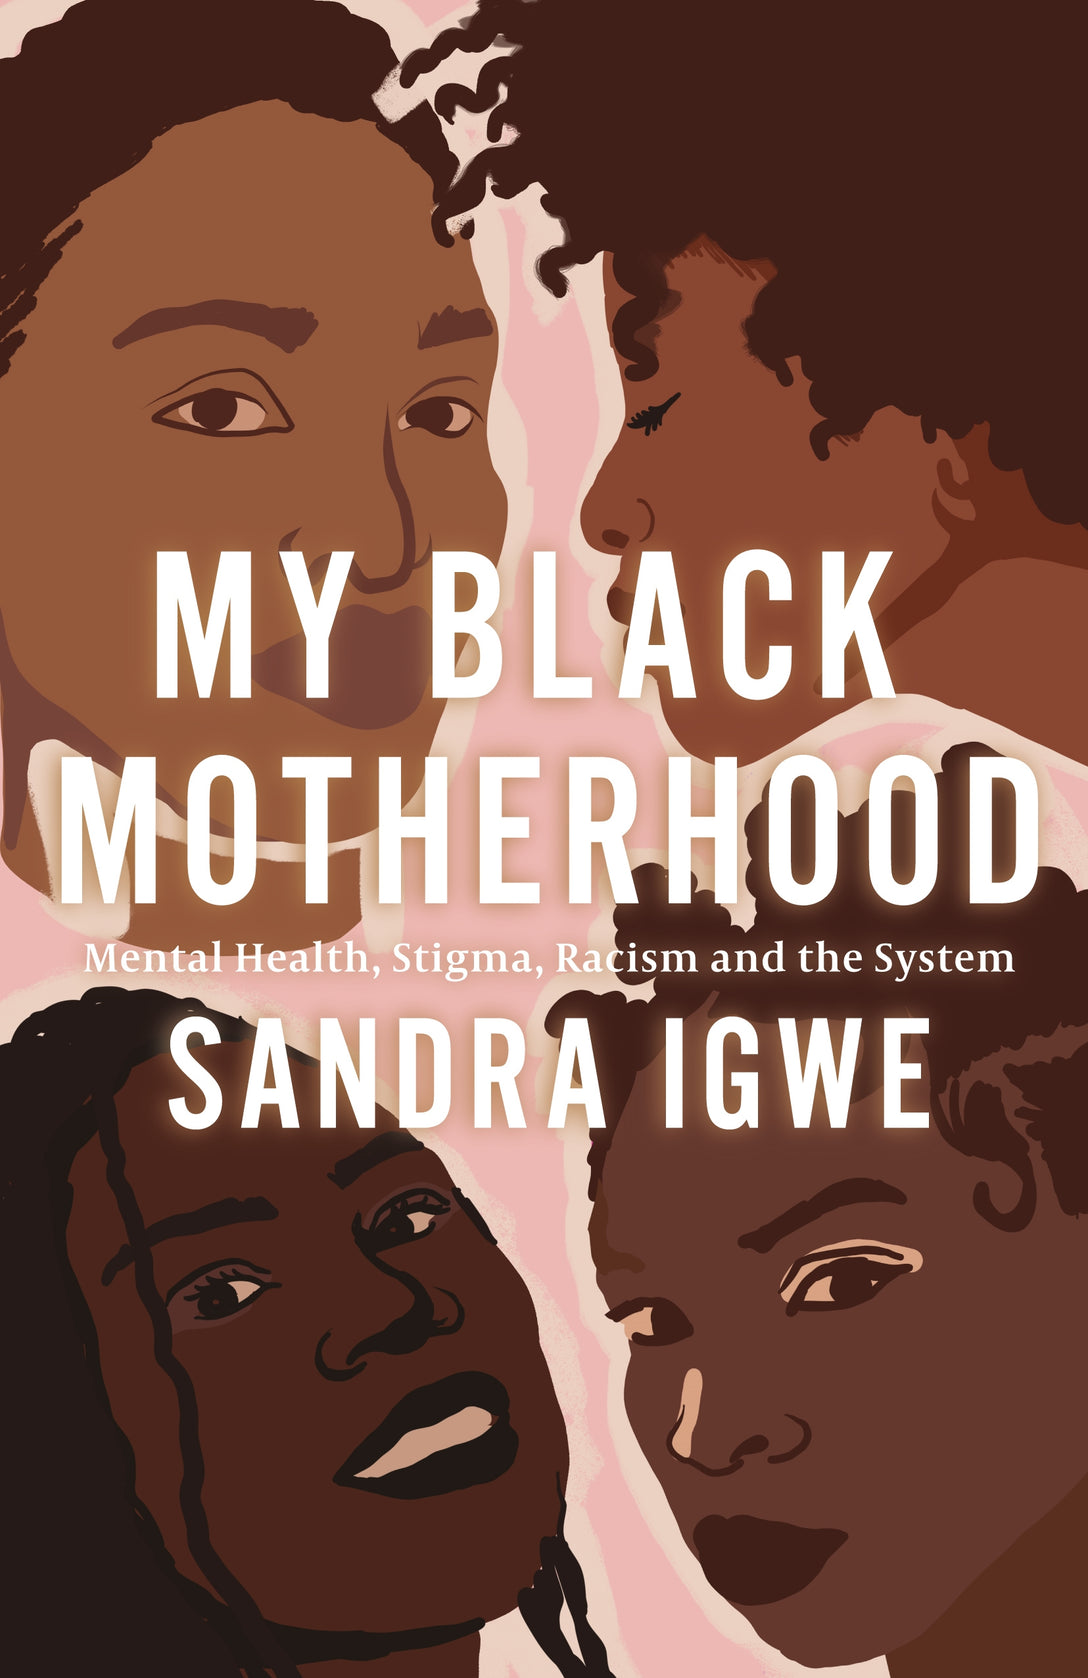 My Black Motherhood by Sandra Igwe